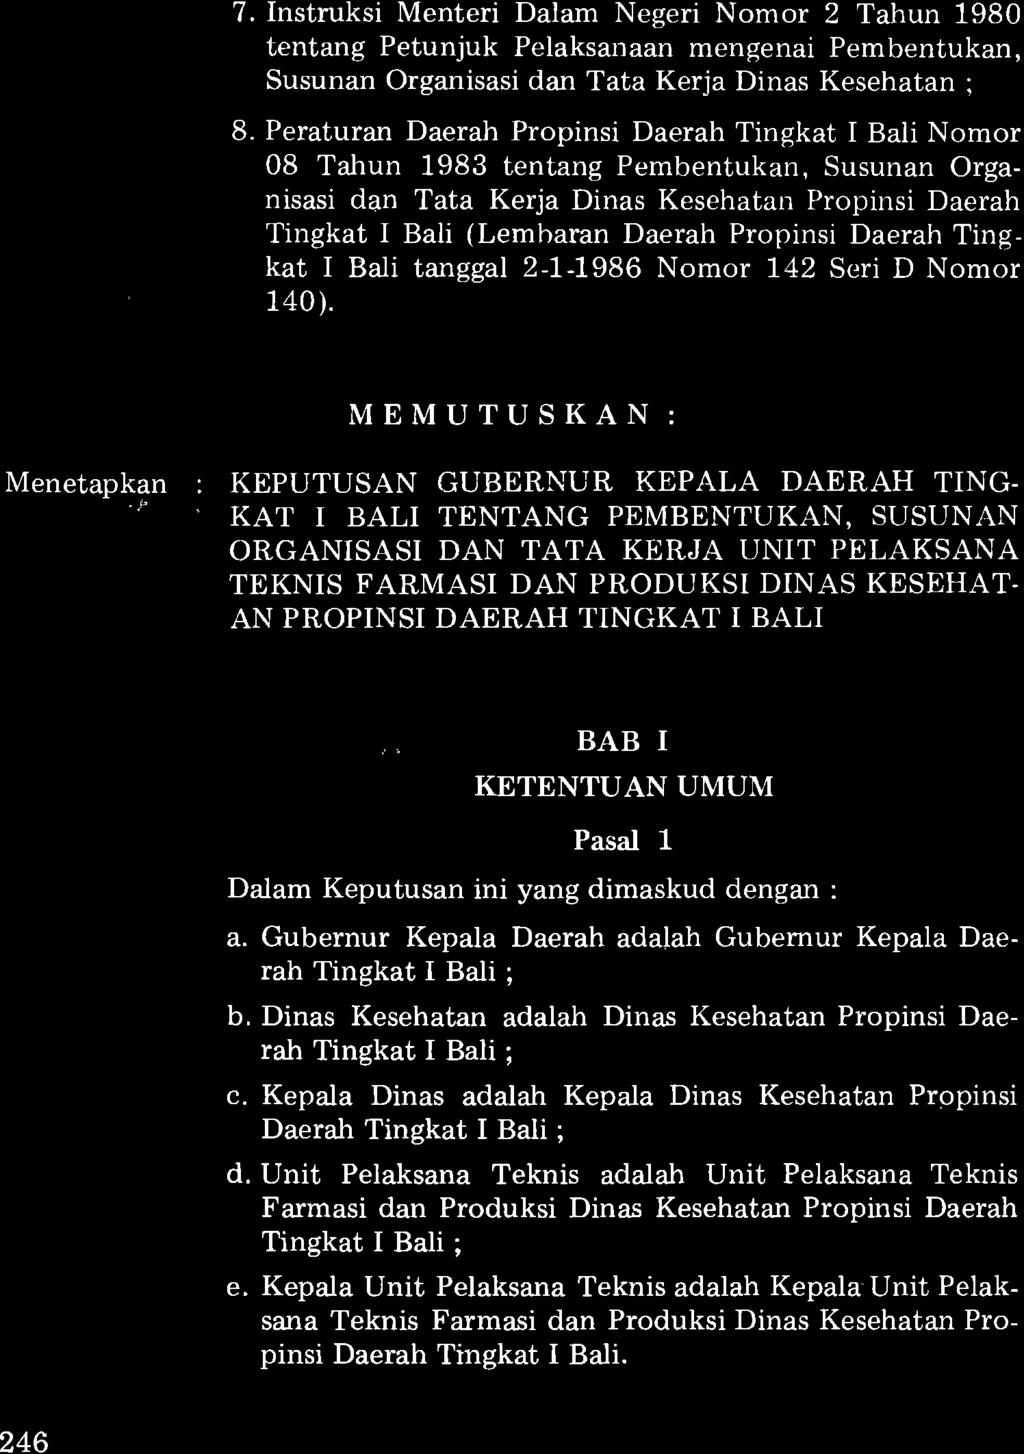 7. Instruksi Menteri Dalam Negeri Nomor 2 Tahun 1980 tentang Petunjuk Pelaksanaan mengenai Pembentukan, Susunan Organisasi dan Tata Kerja Dinas Kesehatan ; 8.